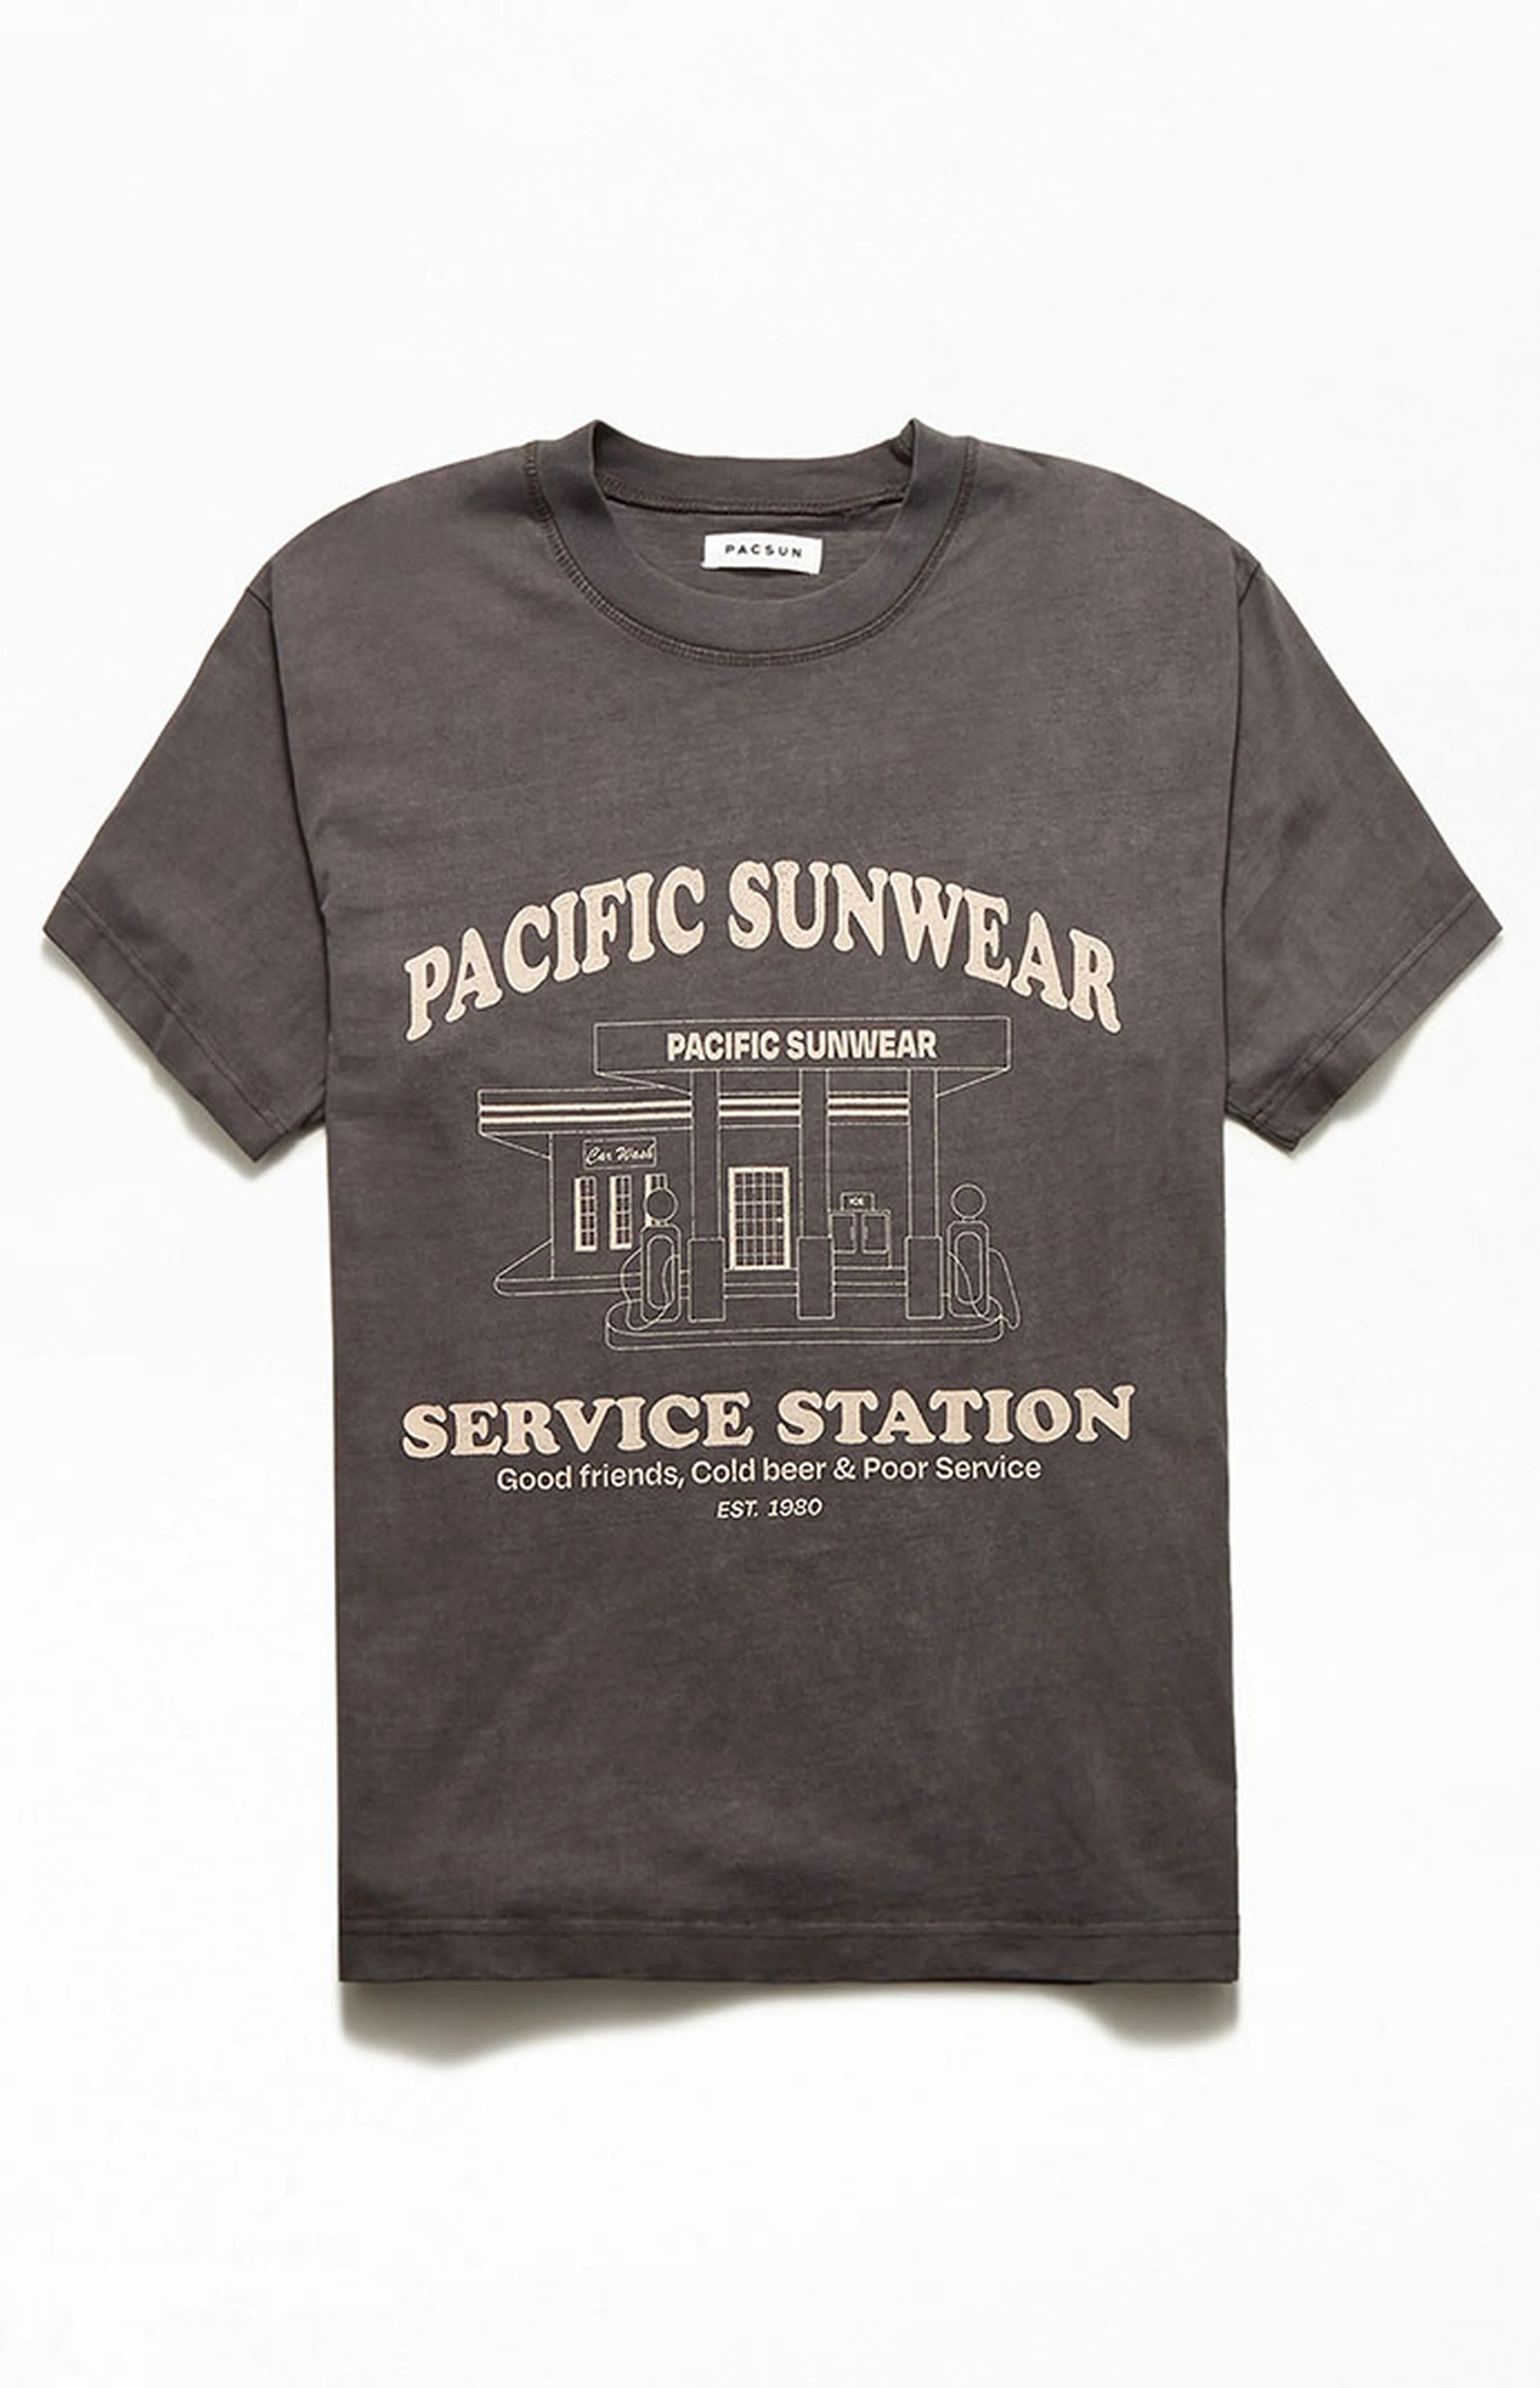 PacSun Pacific Sunwear Service Station T-Shirt | PacSun